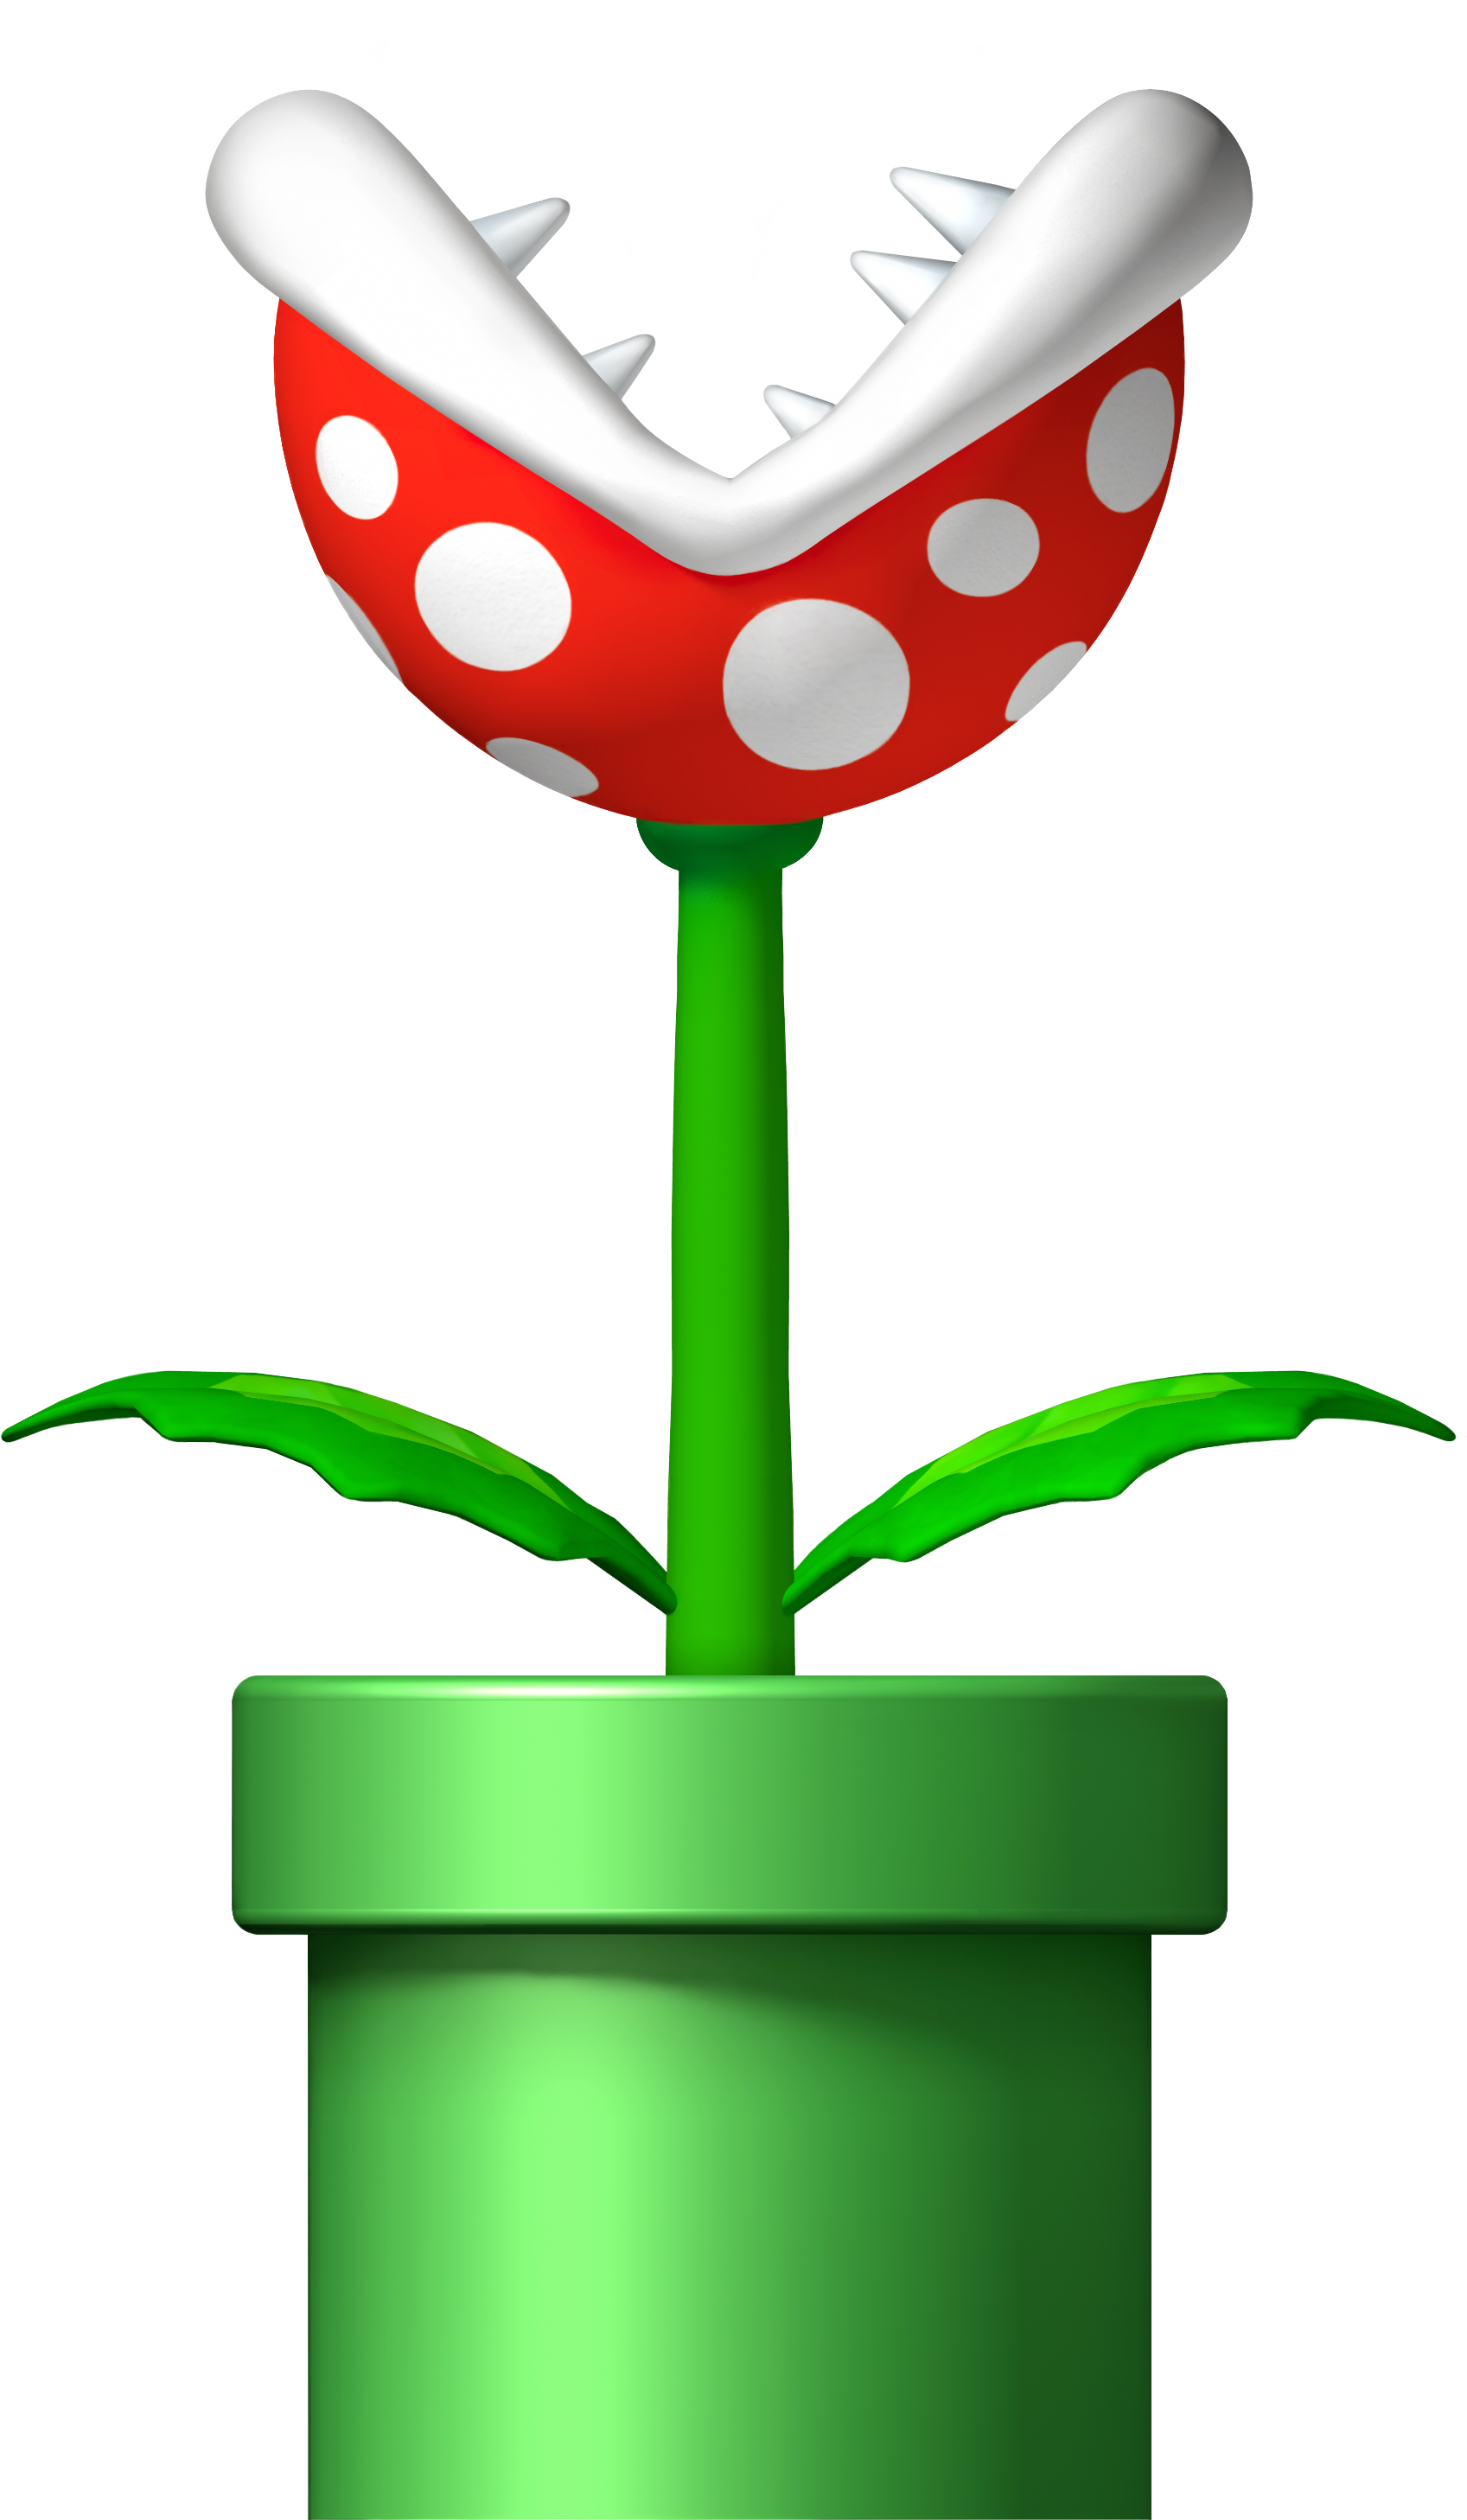 The Piranha Plants From Super Mario Bros.